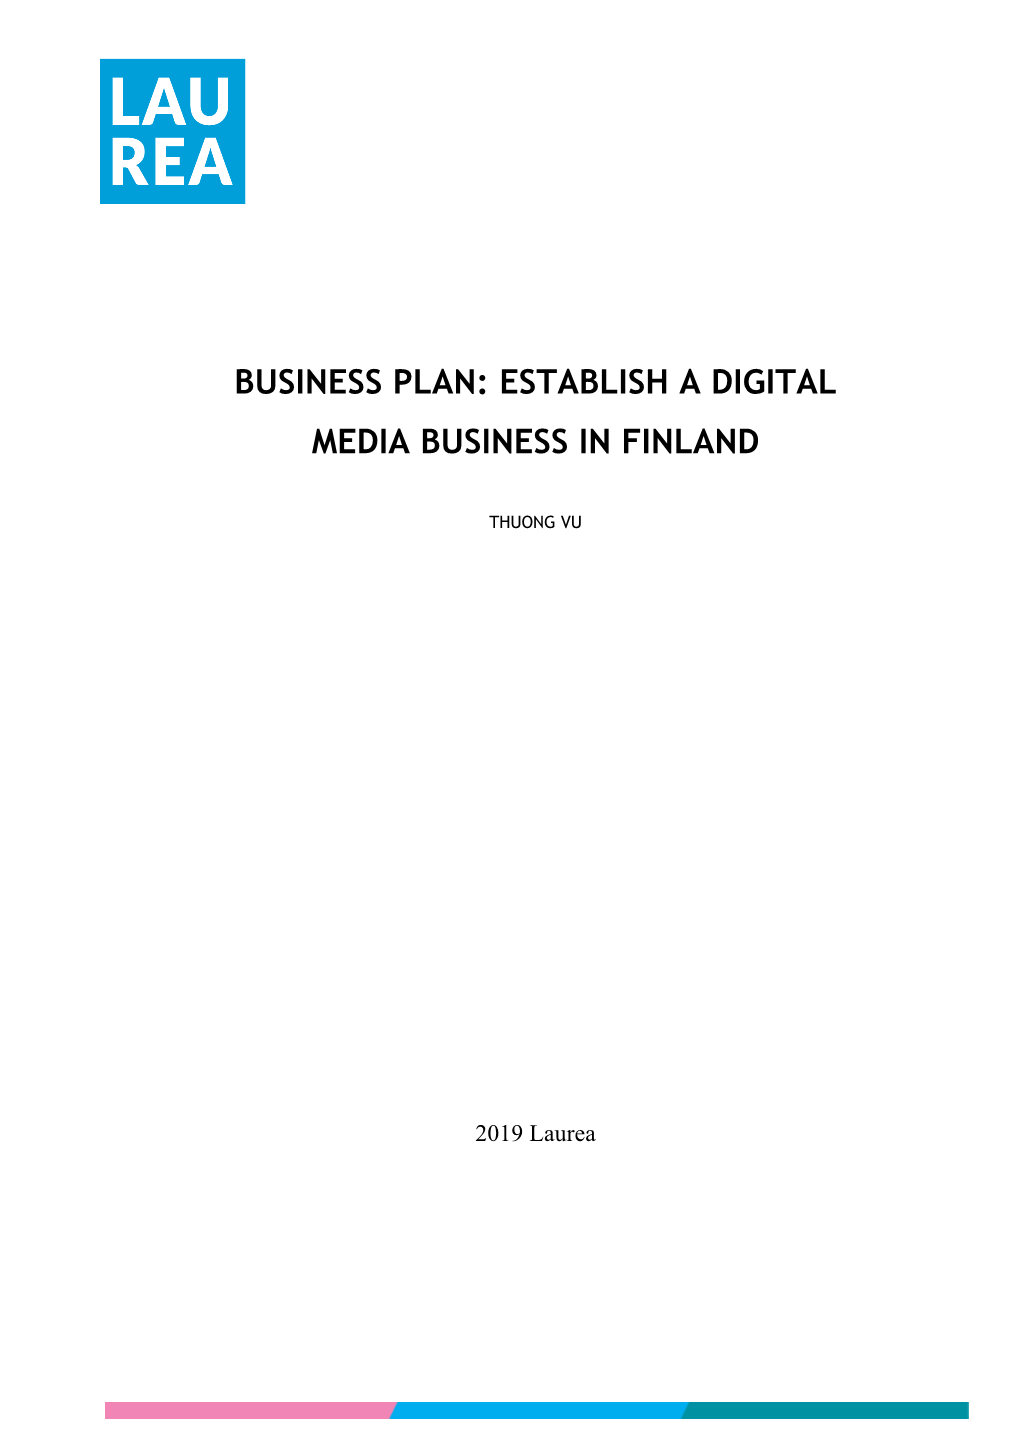 Establish a Digital Media Business in Finland